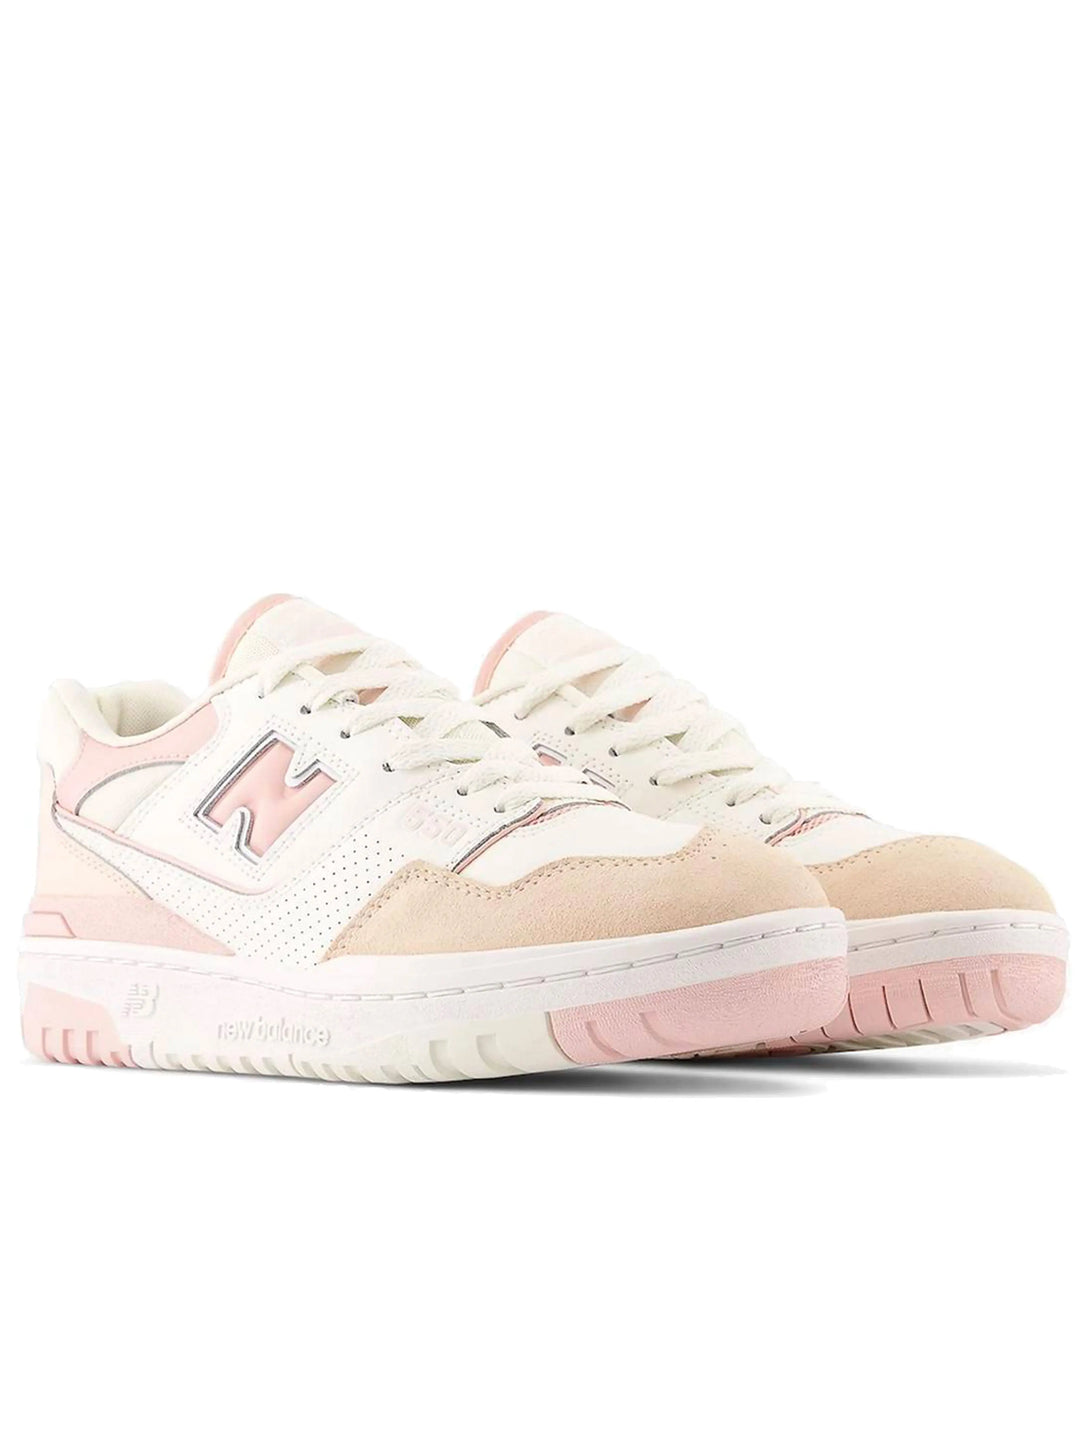 New Balance 550 White Pink [W] Prior